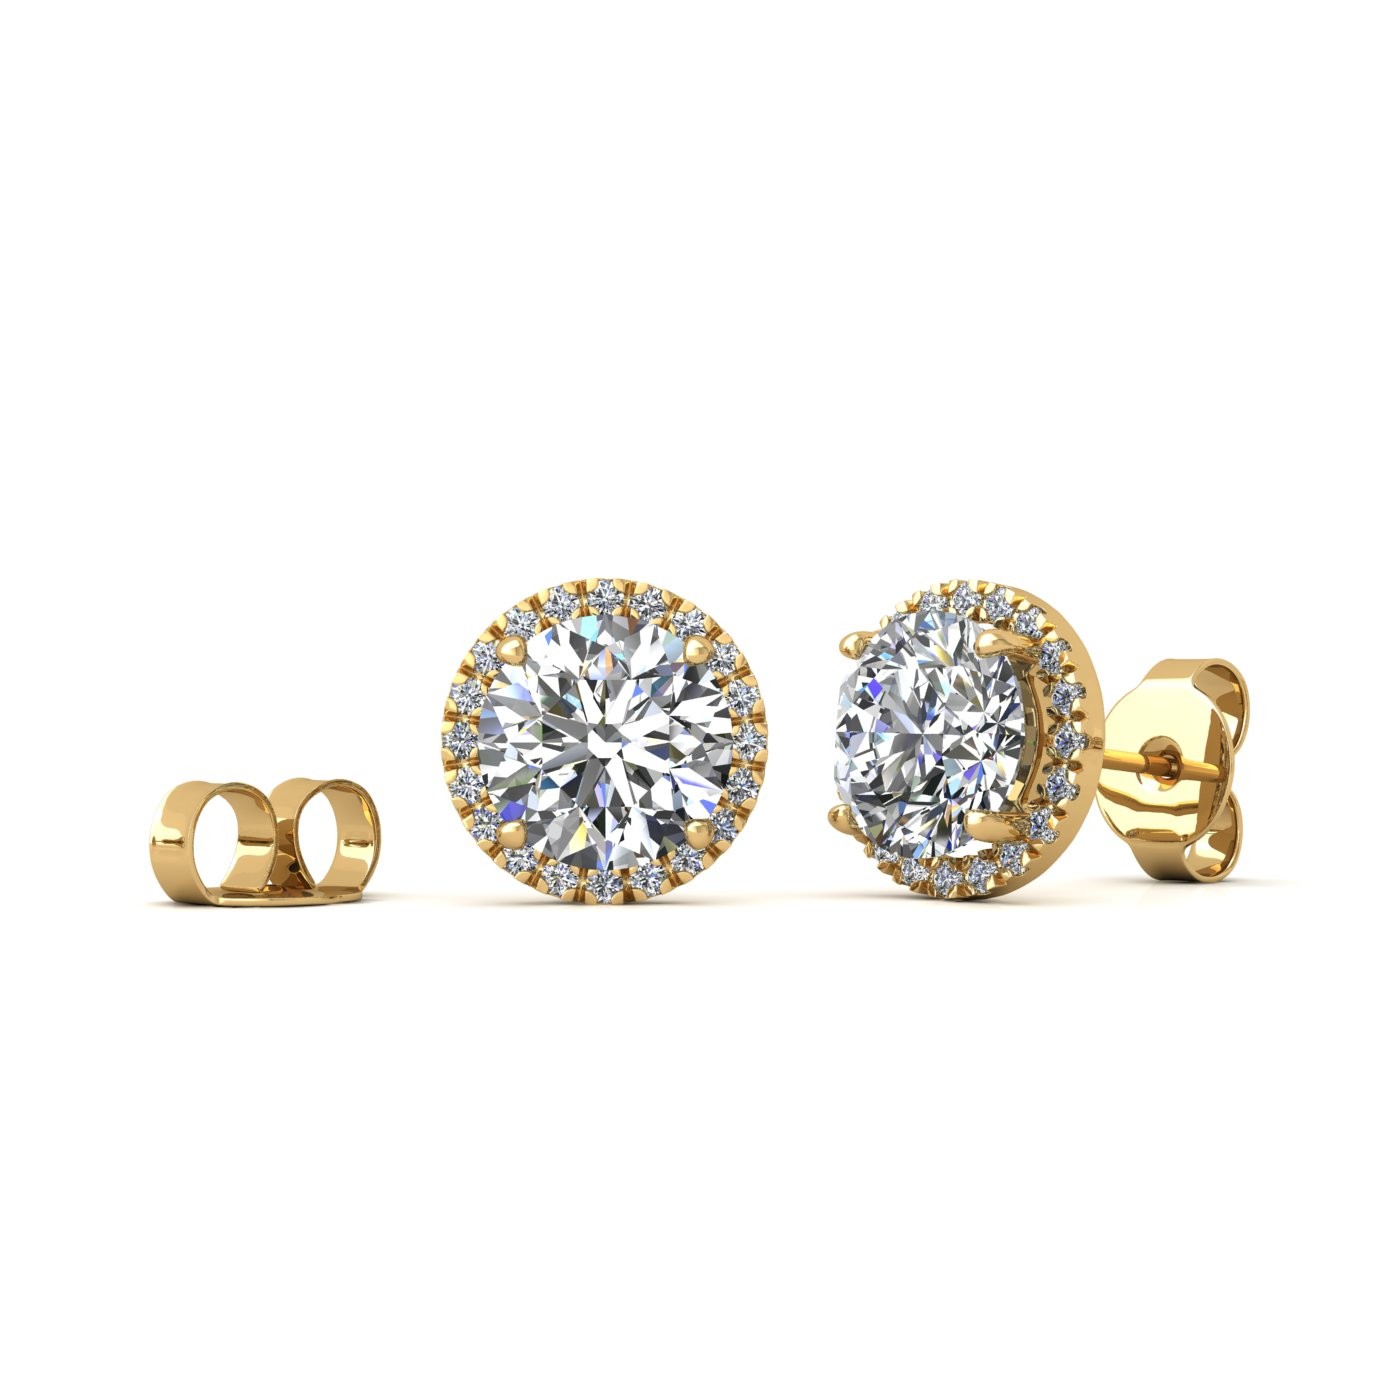 18k rose gold  0,7 ct each (1,4 tcw) 4 prongs round shape diamond earrings with diamond pavÉ set halo Photos & images